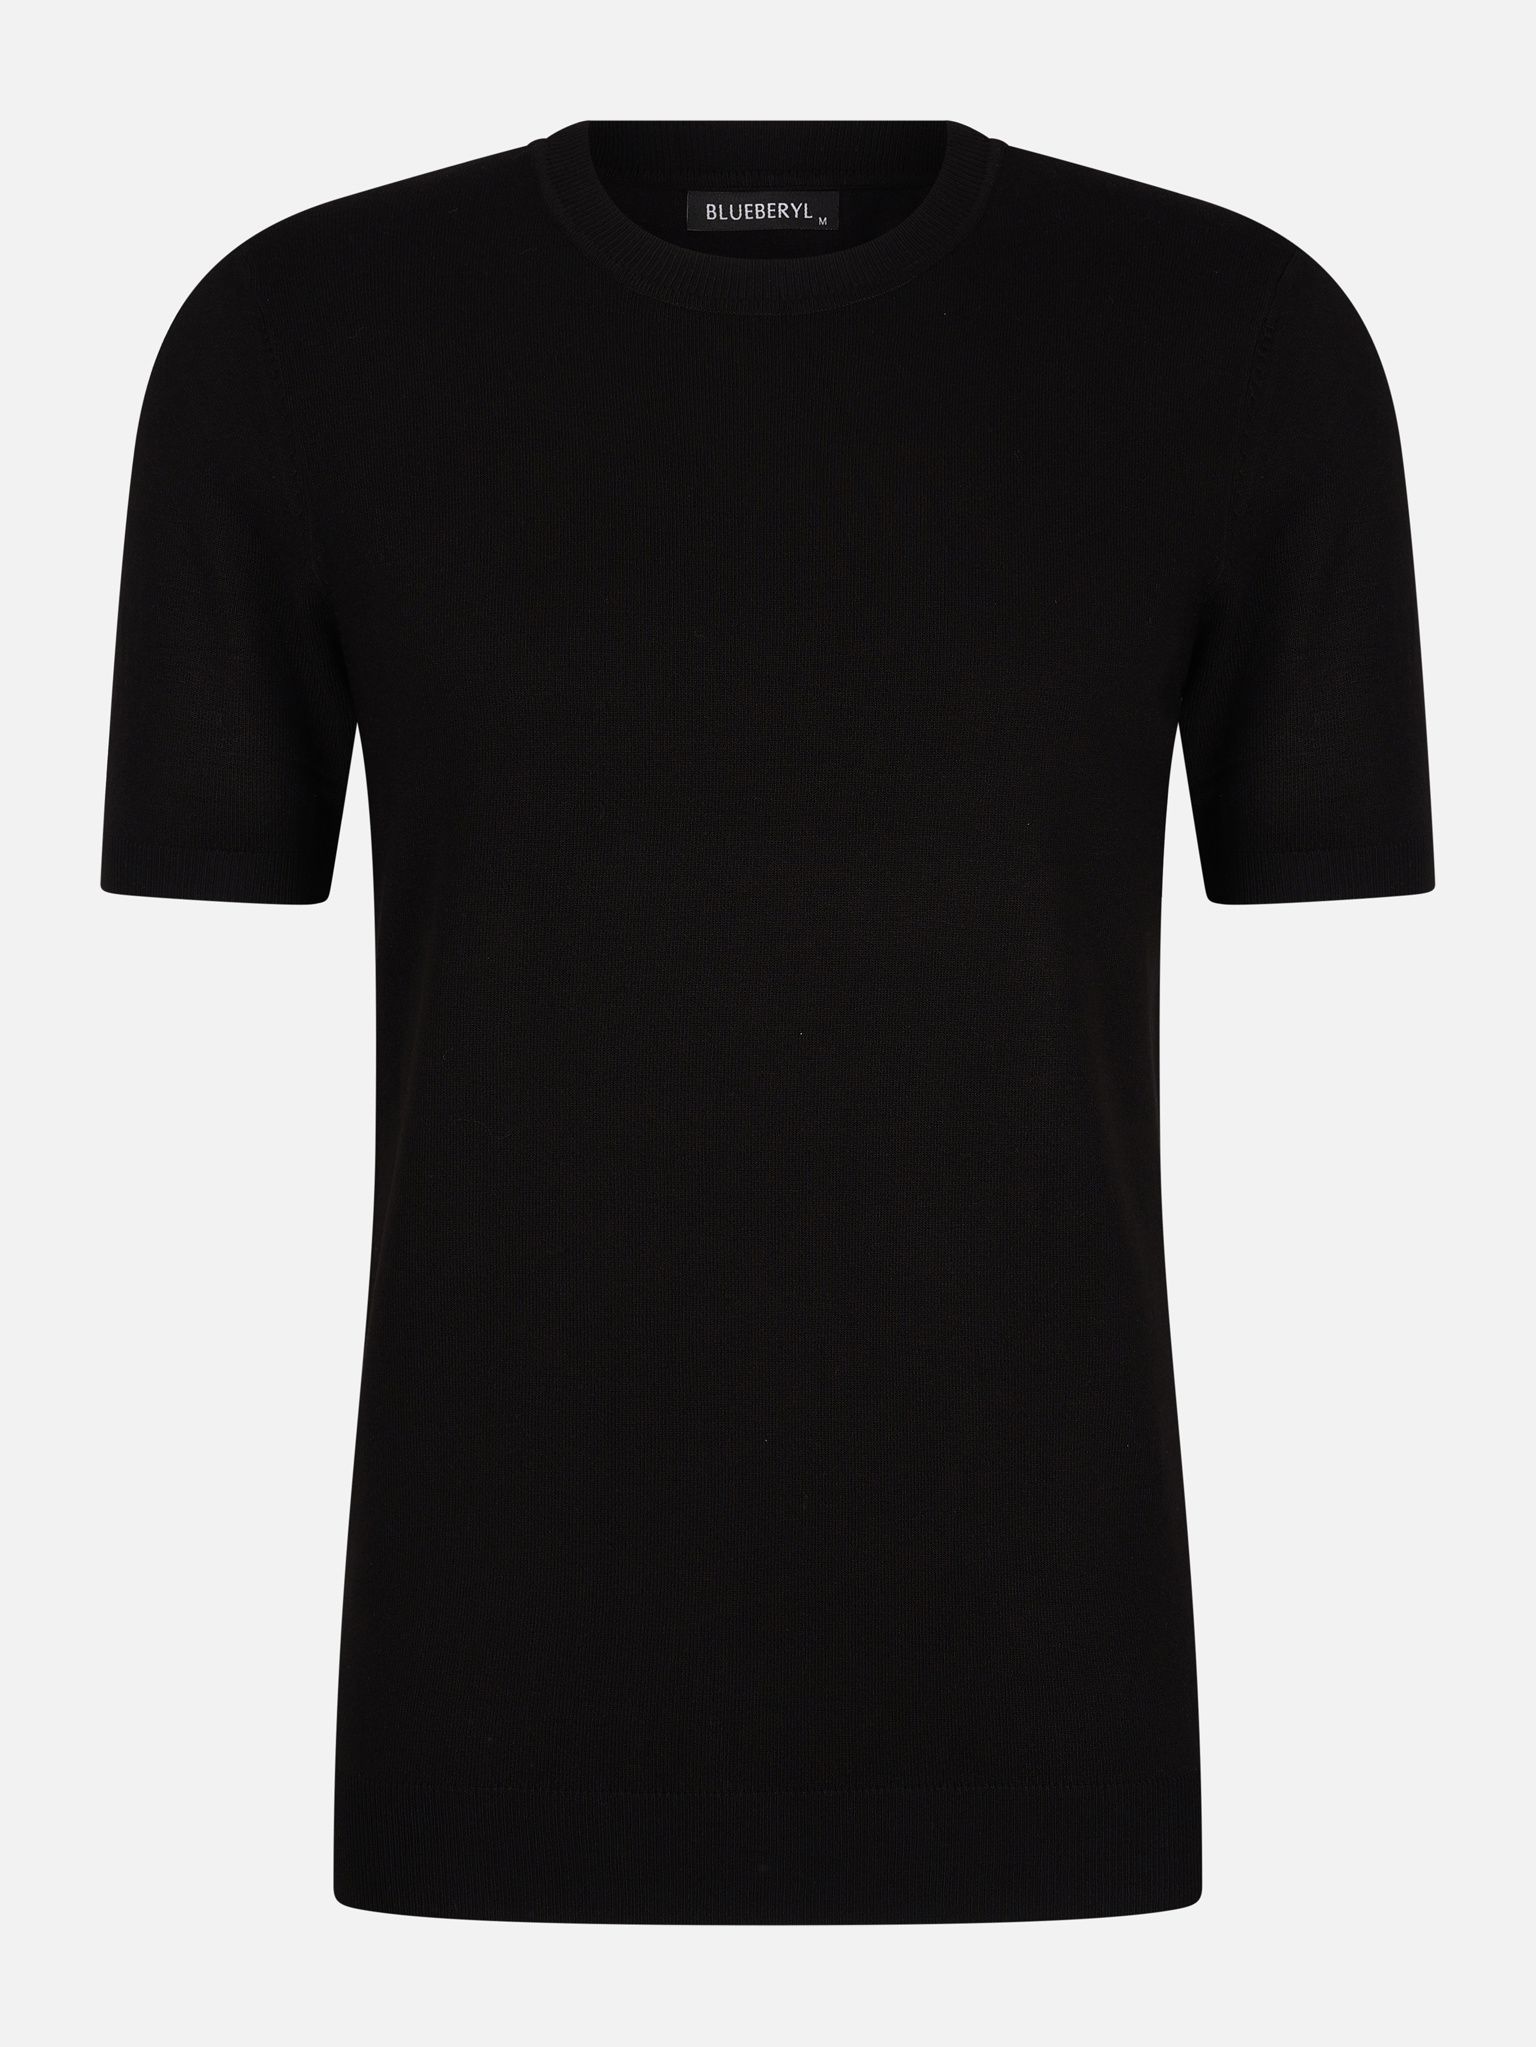 bespotten Verslaving dynamisch Zwart T-shirt heren kopen voor €29,95 | Valenci - VALENCI